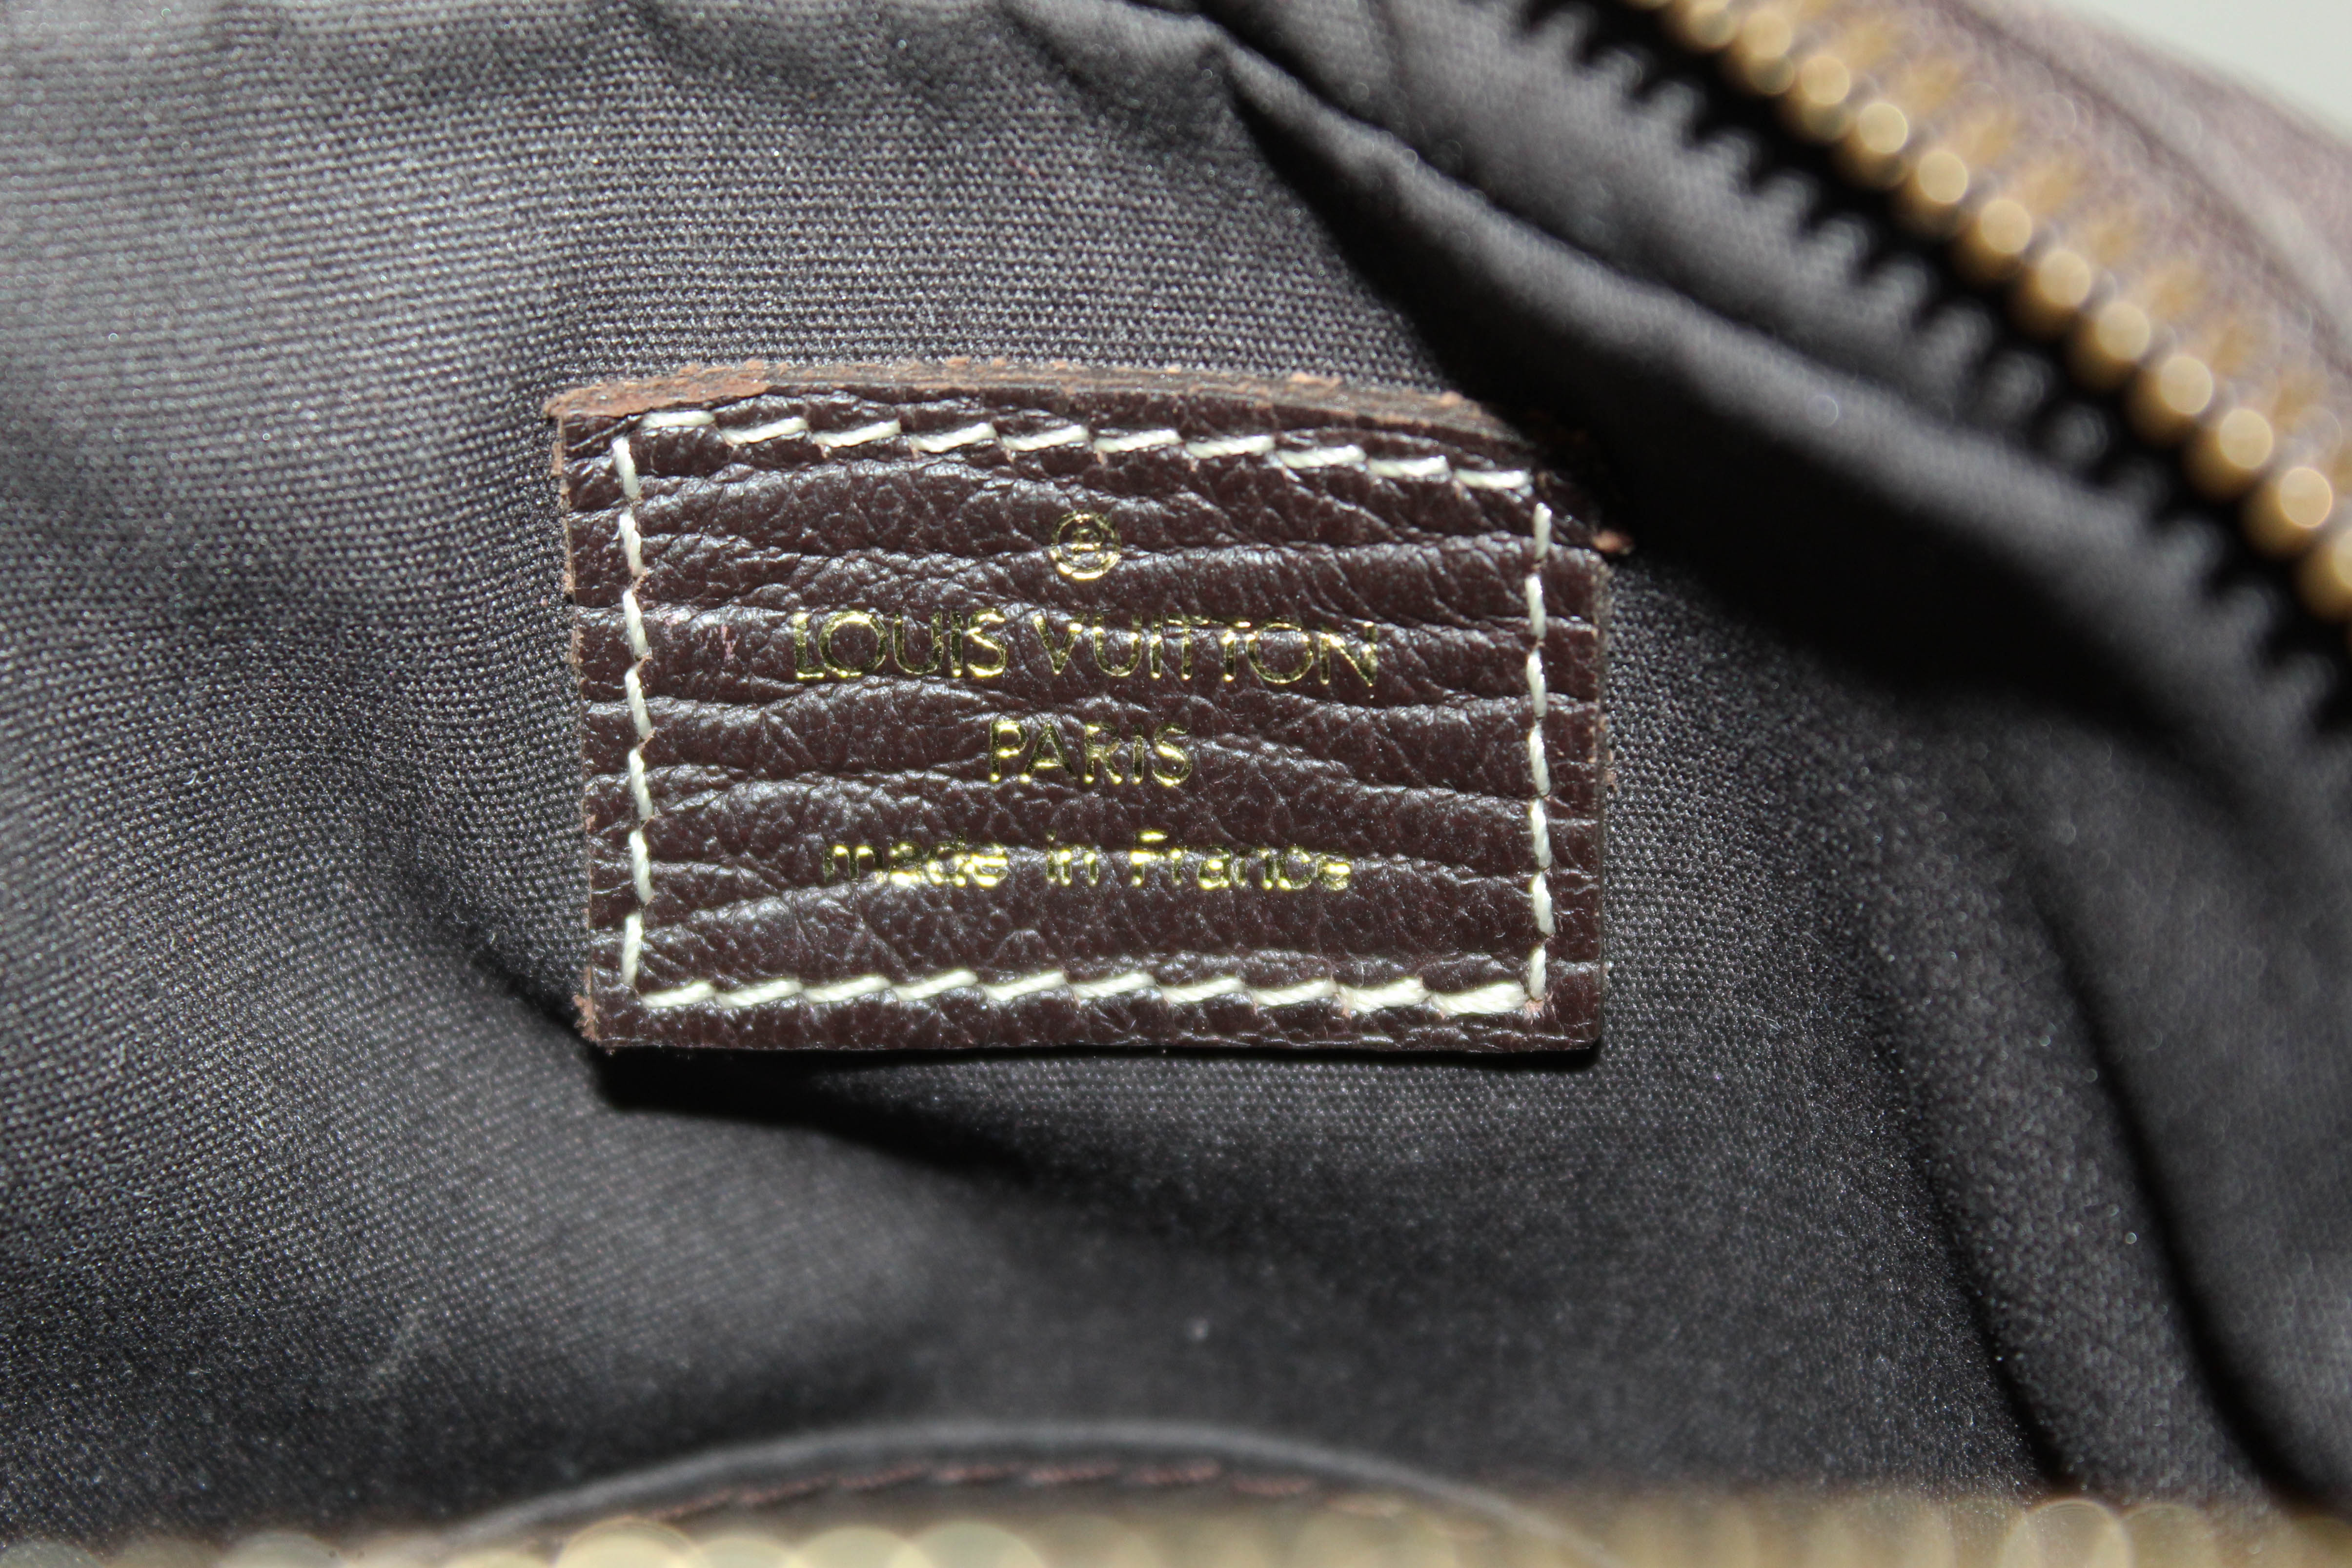 LOUIS VUITTON LV Mini Danube Shoulder Bag Monogram Leather Brown M45268  64SG702